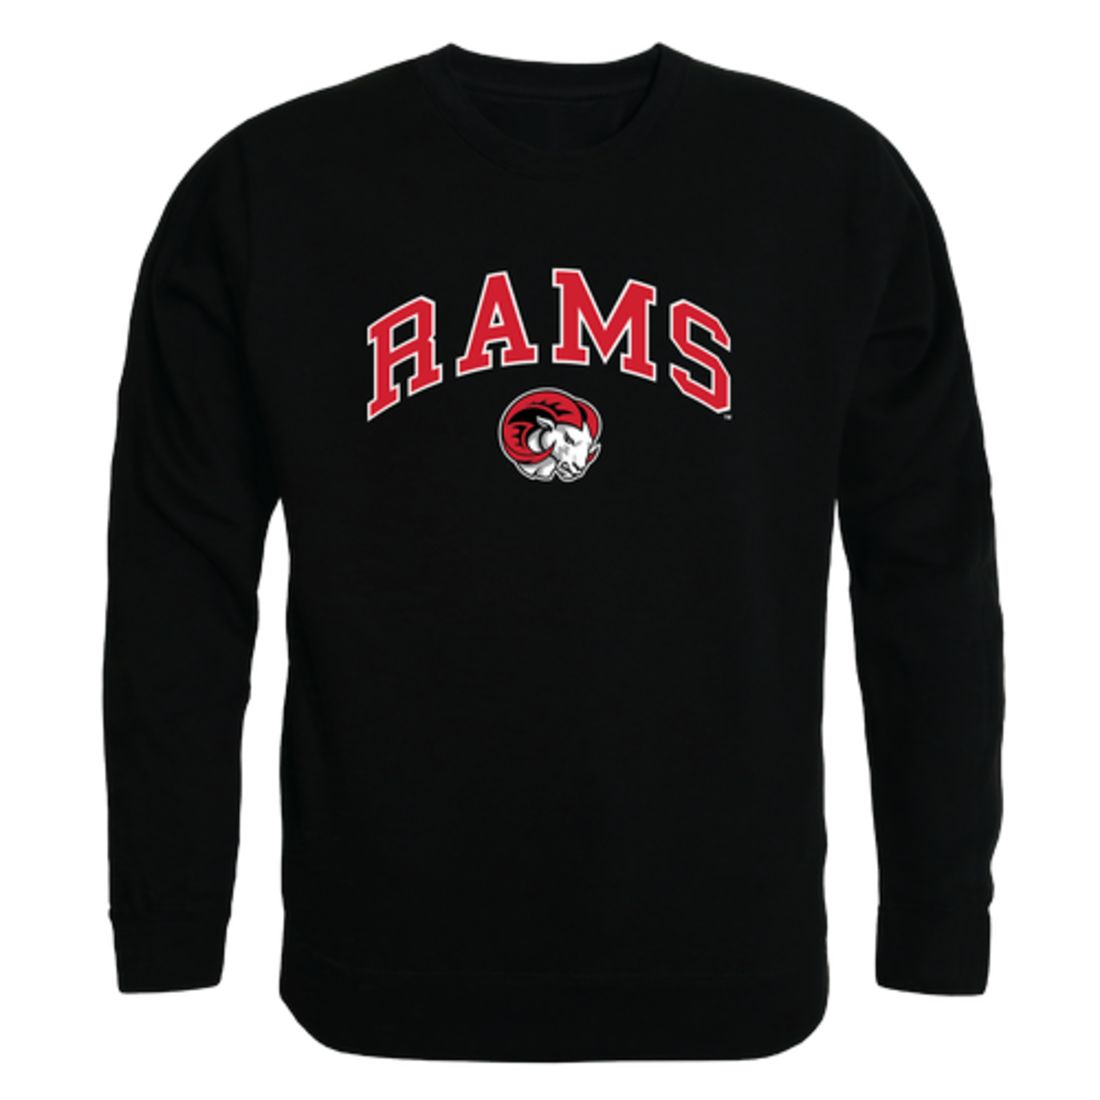 Winston-Salem State University Rams Campus Crewneck Sweatshirt